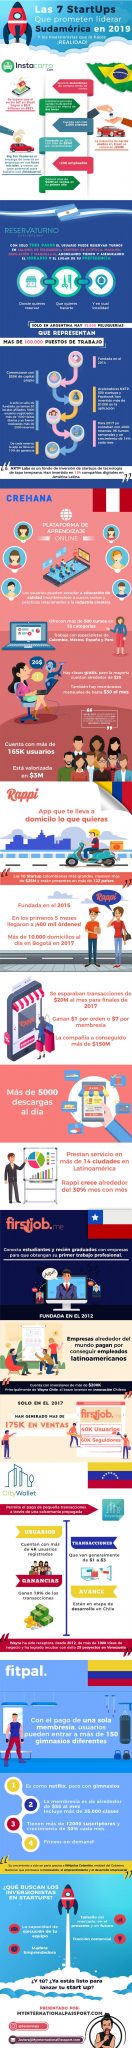 7 startups sudamerica 2019